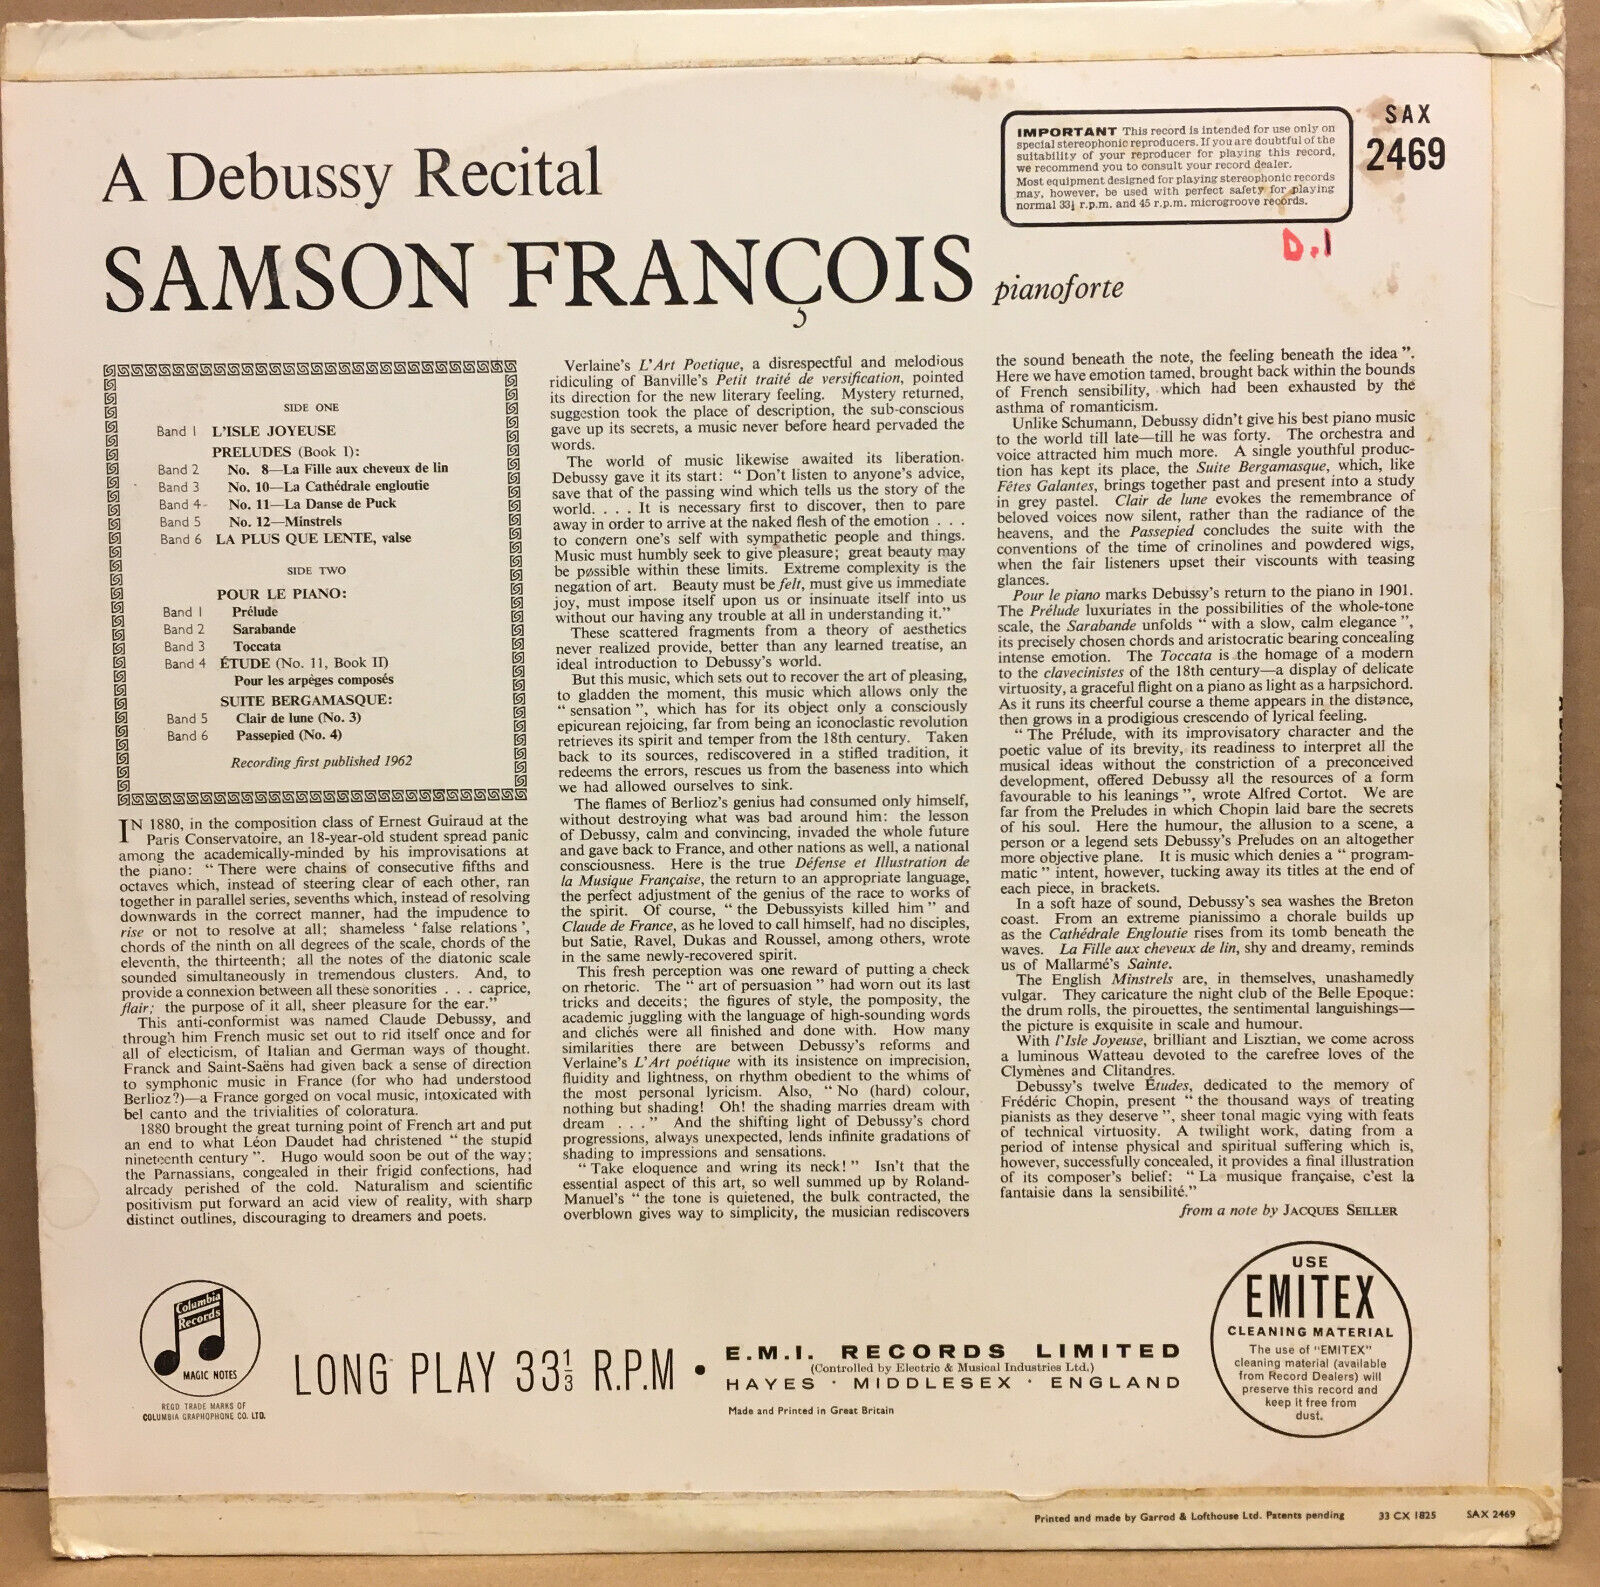 Pic 1 A DEBUSSY RECITAL SAMSON FRANÇOIS 1962 SAX 2469